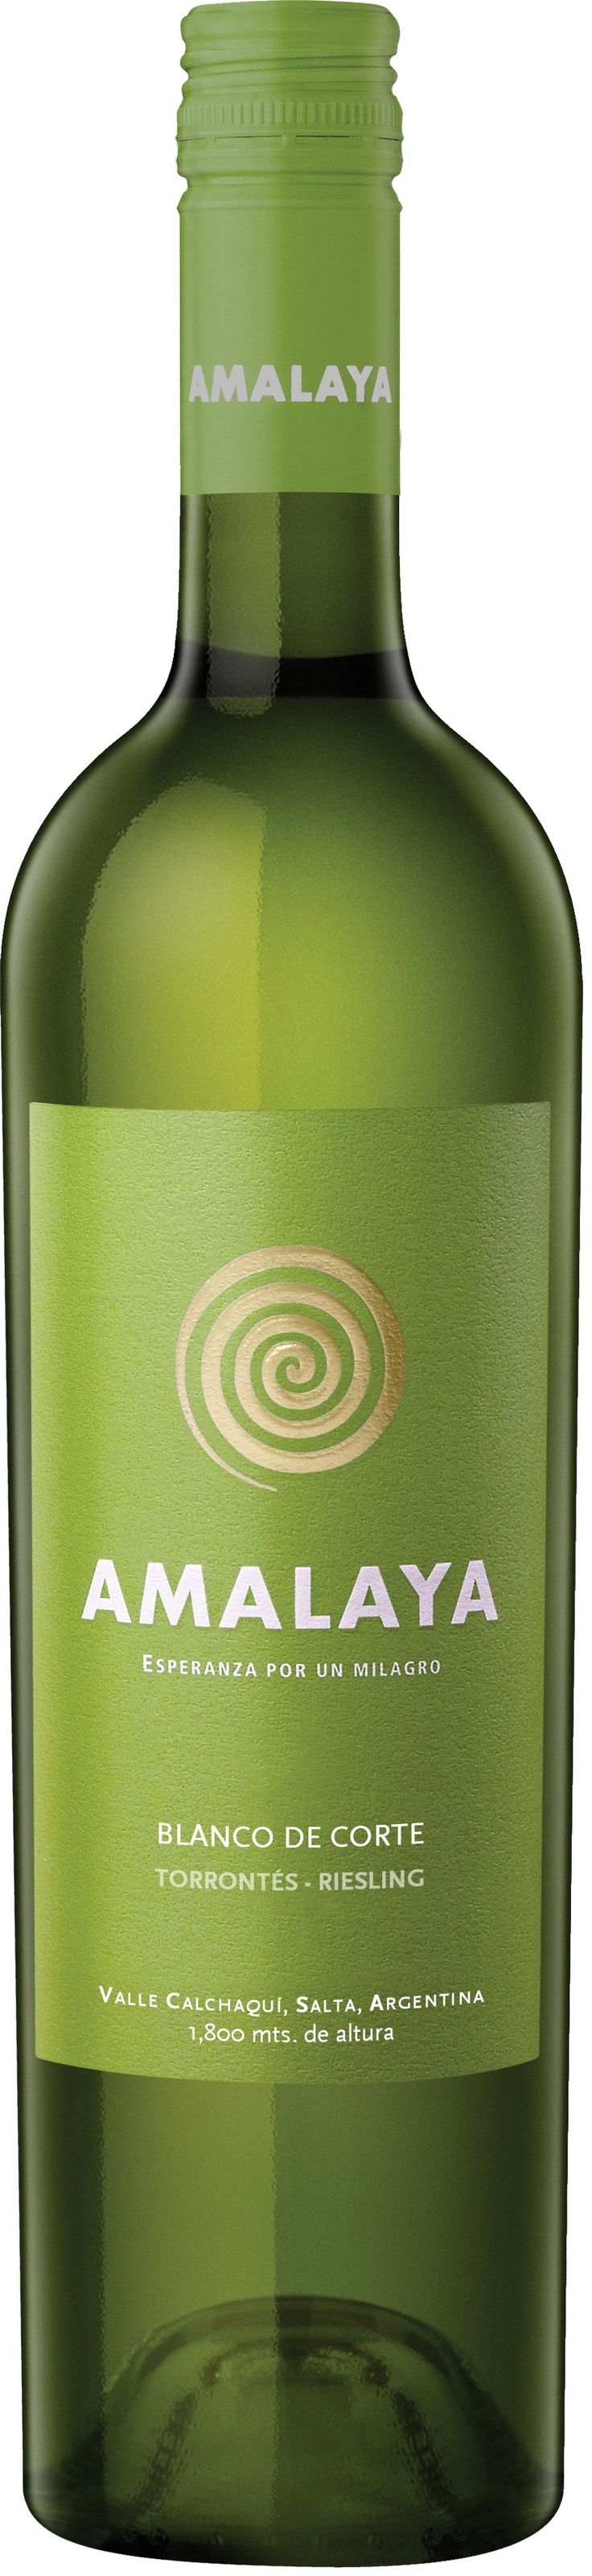 Caudalia wine Box Mayo 2022: Bodega Amalaya - Blanco de Corte (Seco) - 2021 - Salta- Argentina